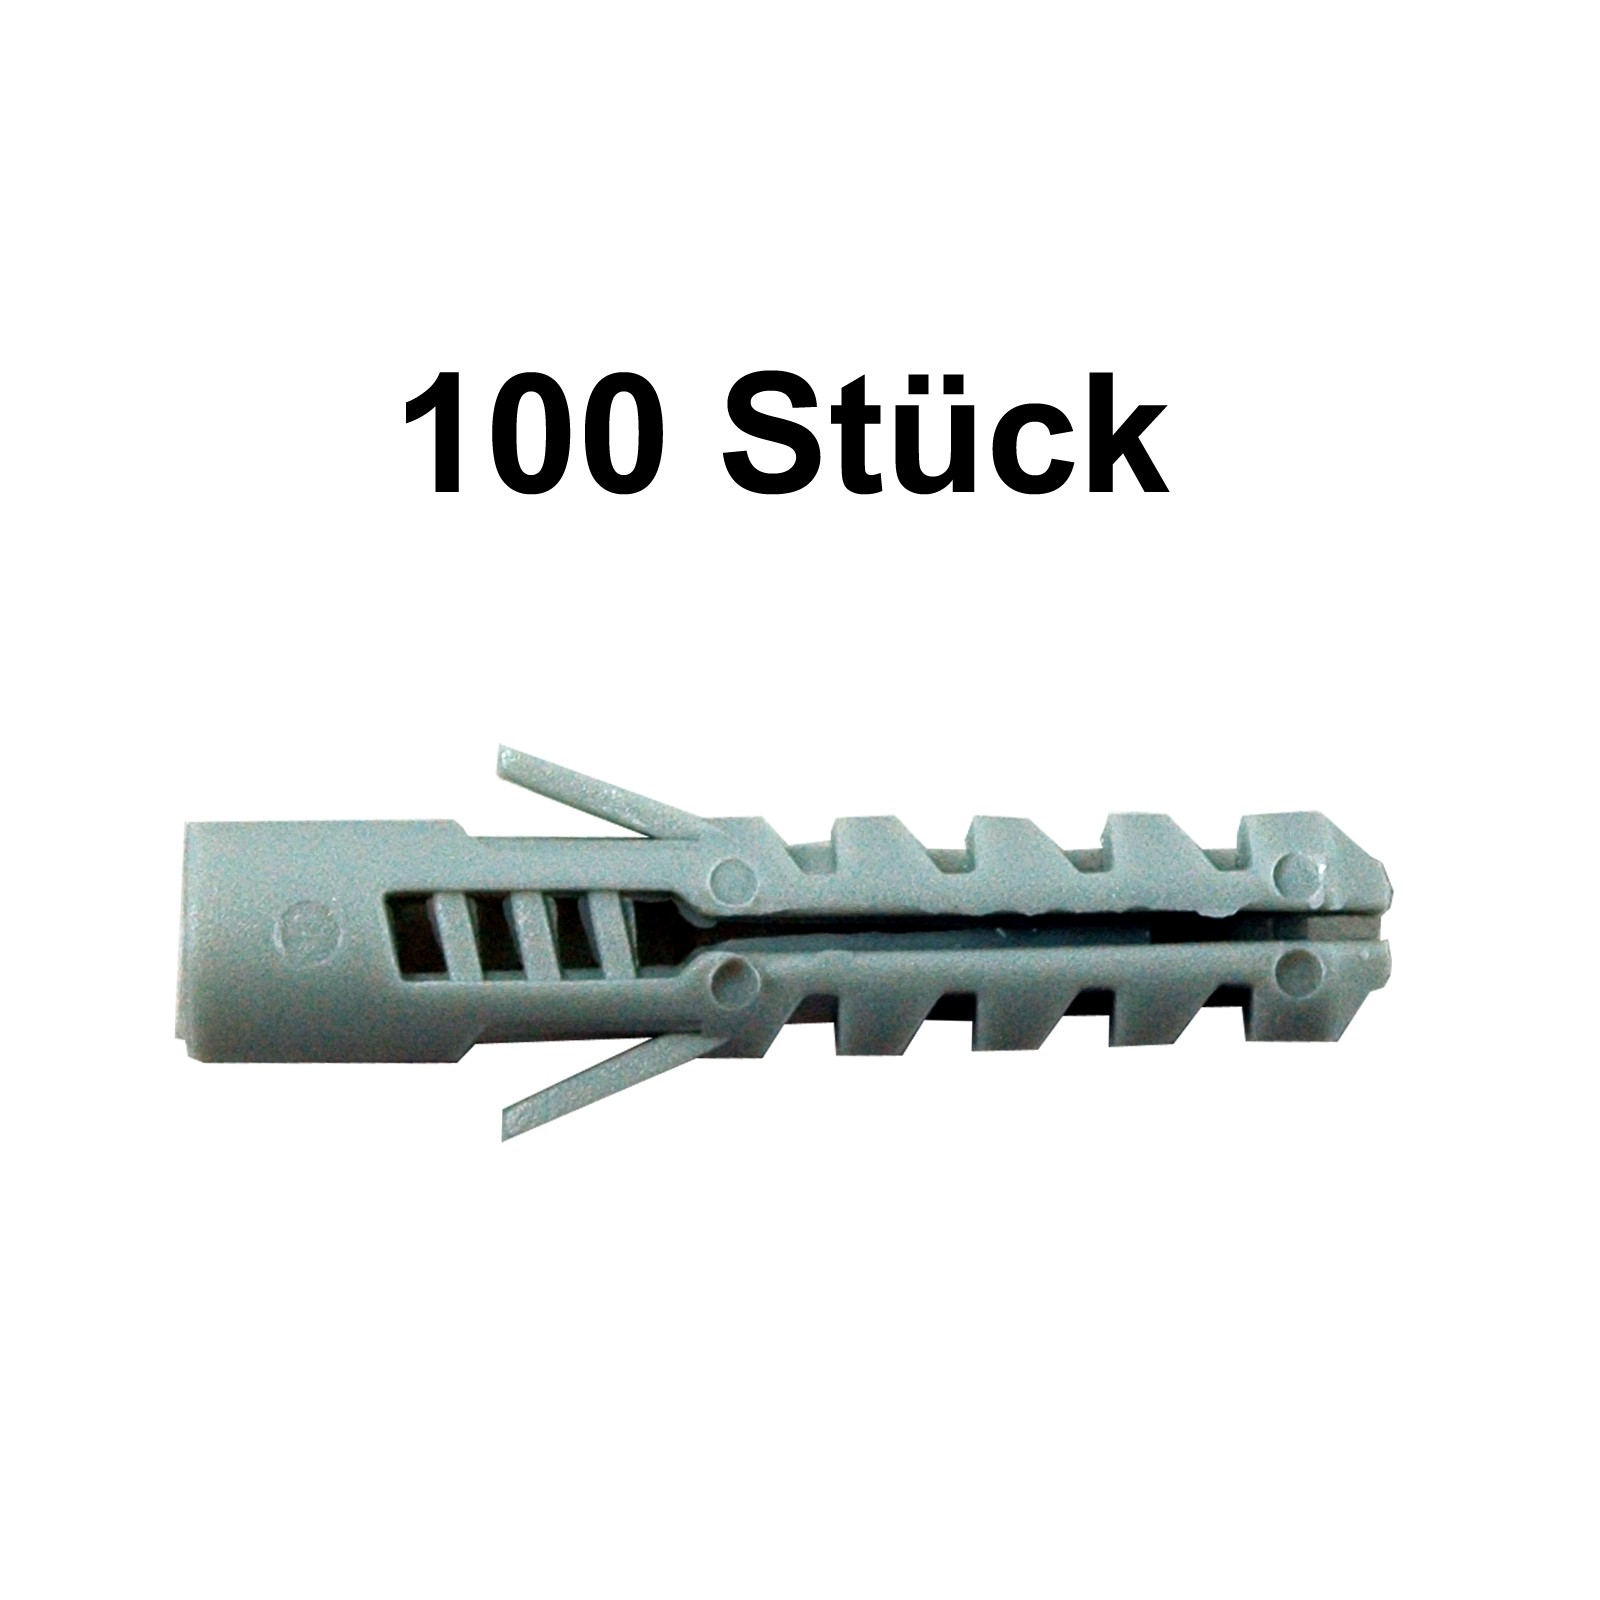 100 pieces FGK-Nylondübel 8x40 mm for screws 4,5-6 mm drills 8 mm